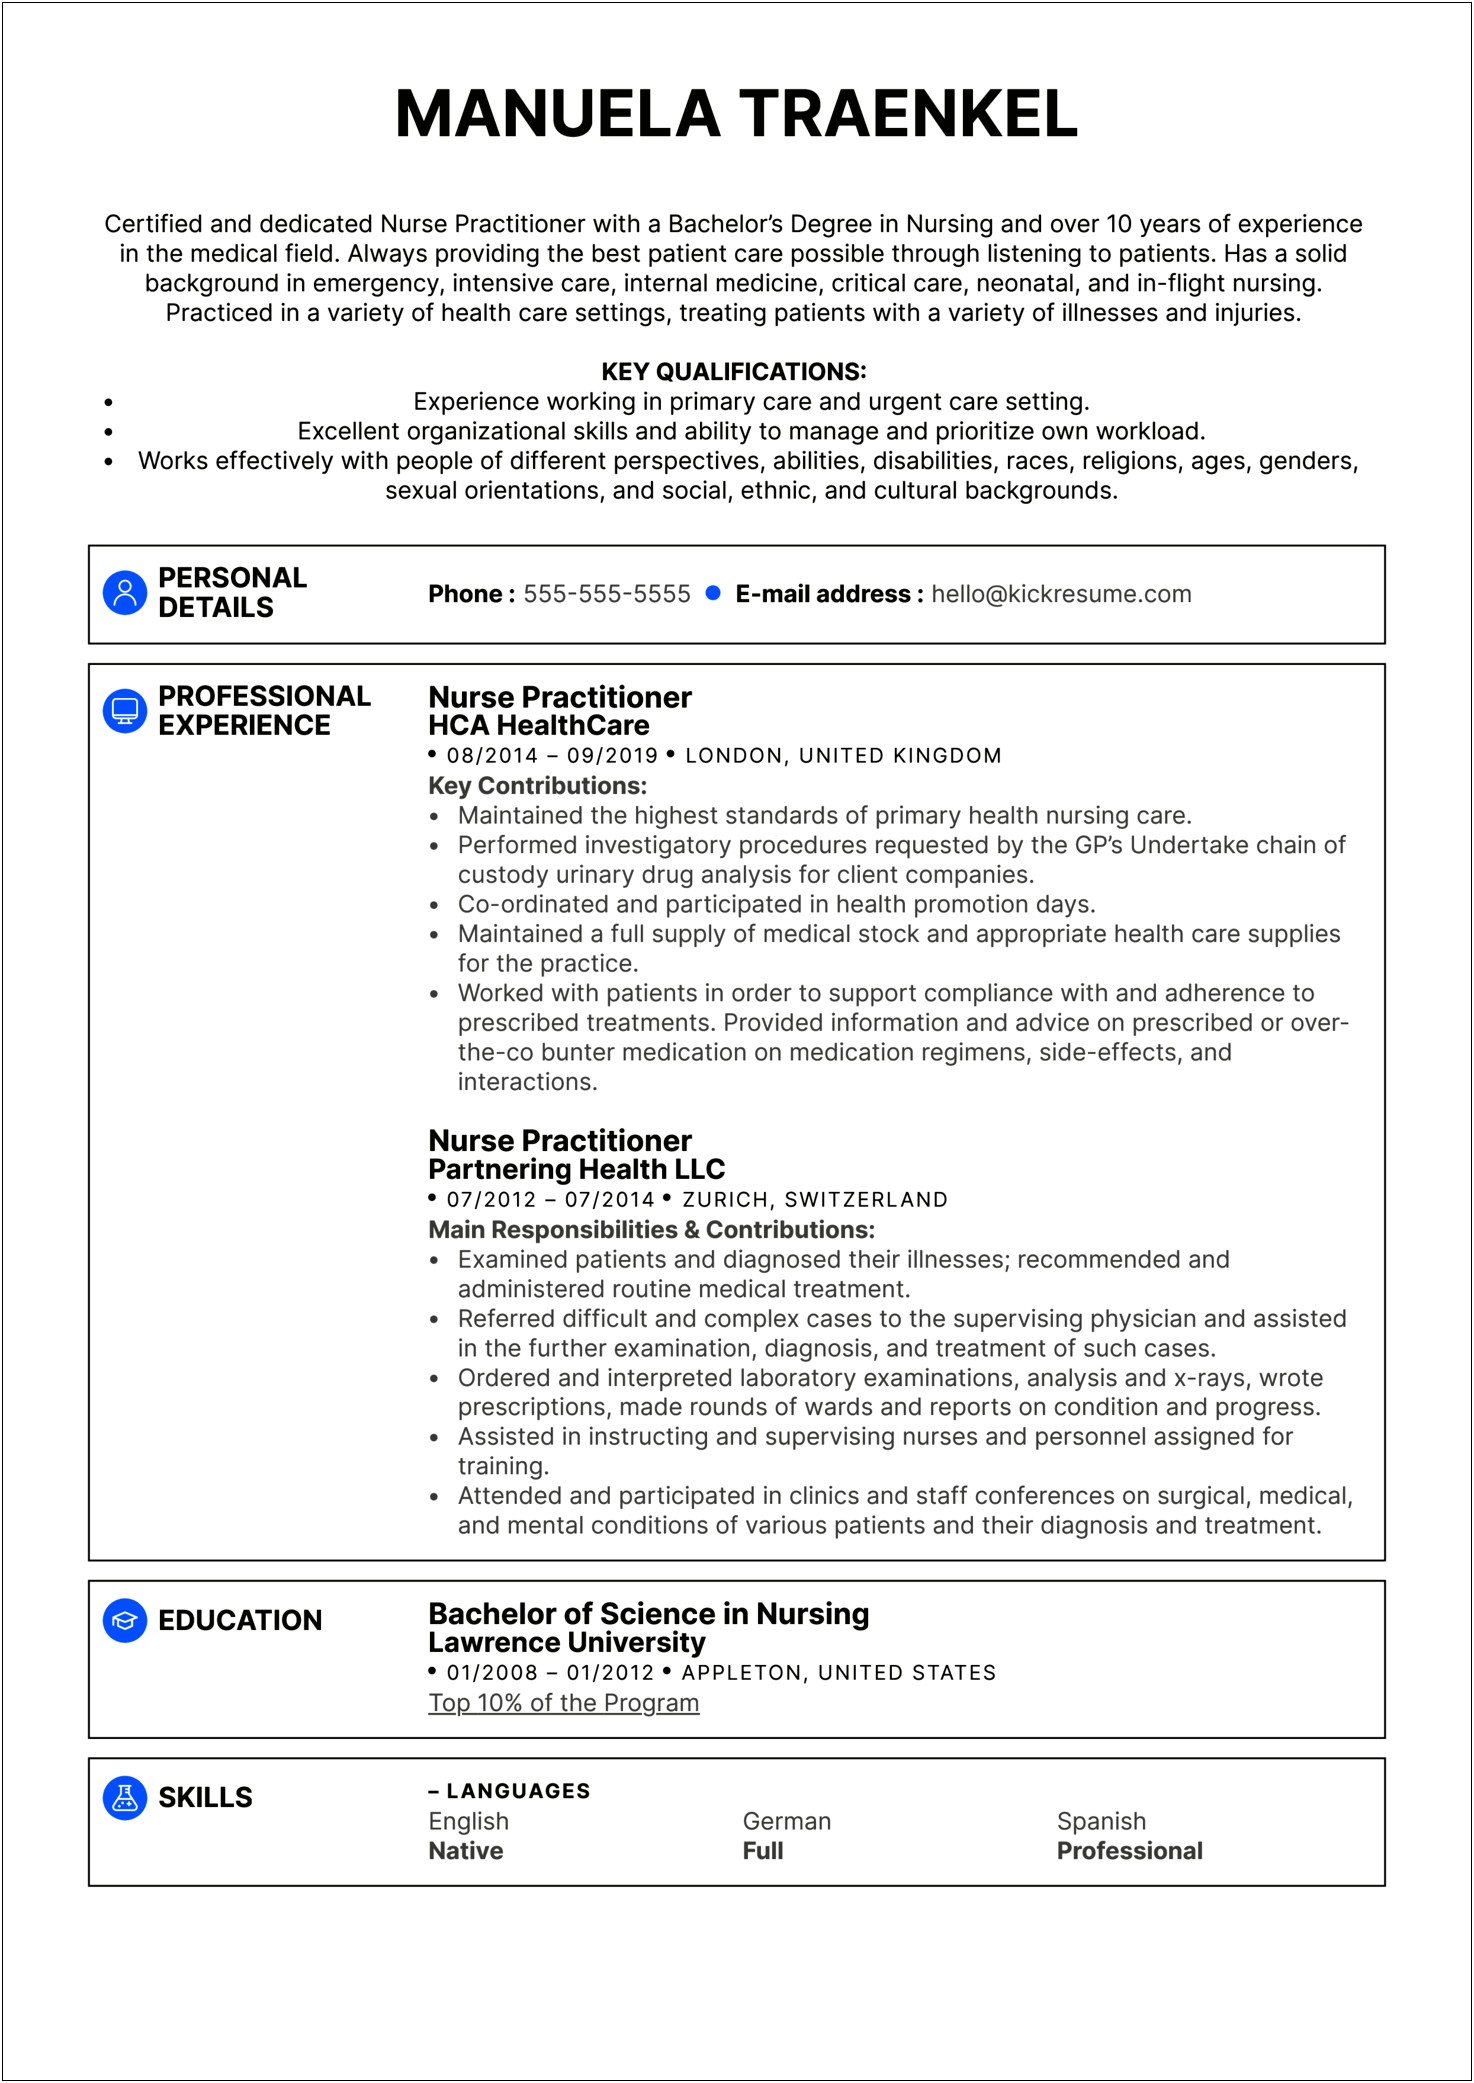 Resume Objective Samples For Fnp School